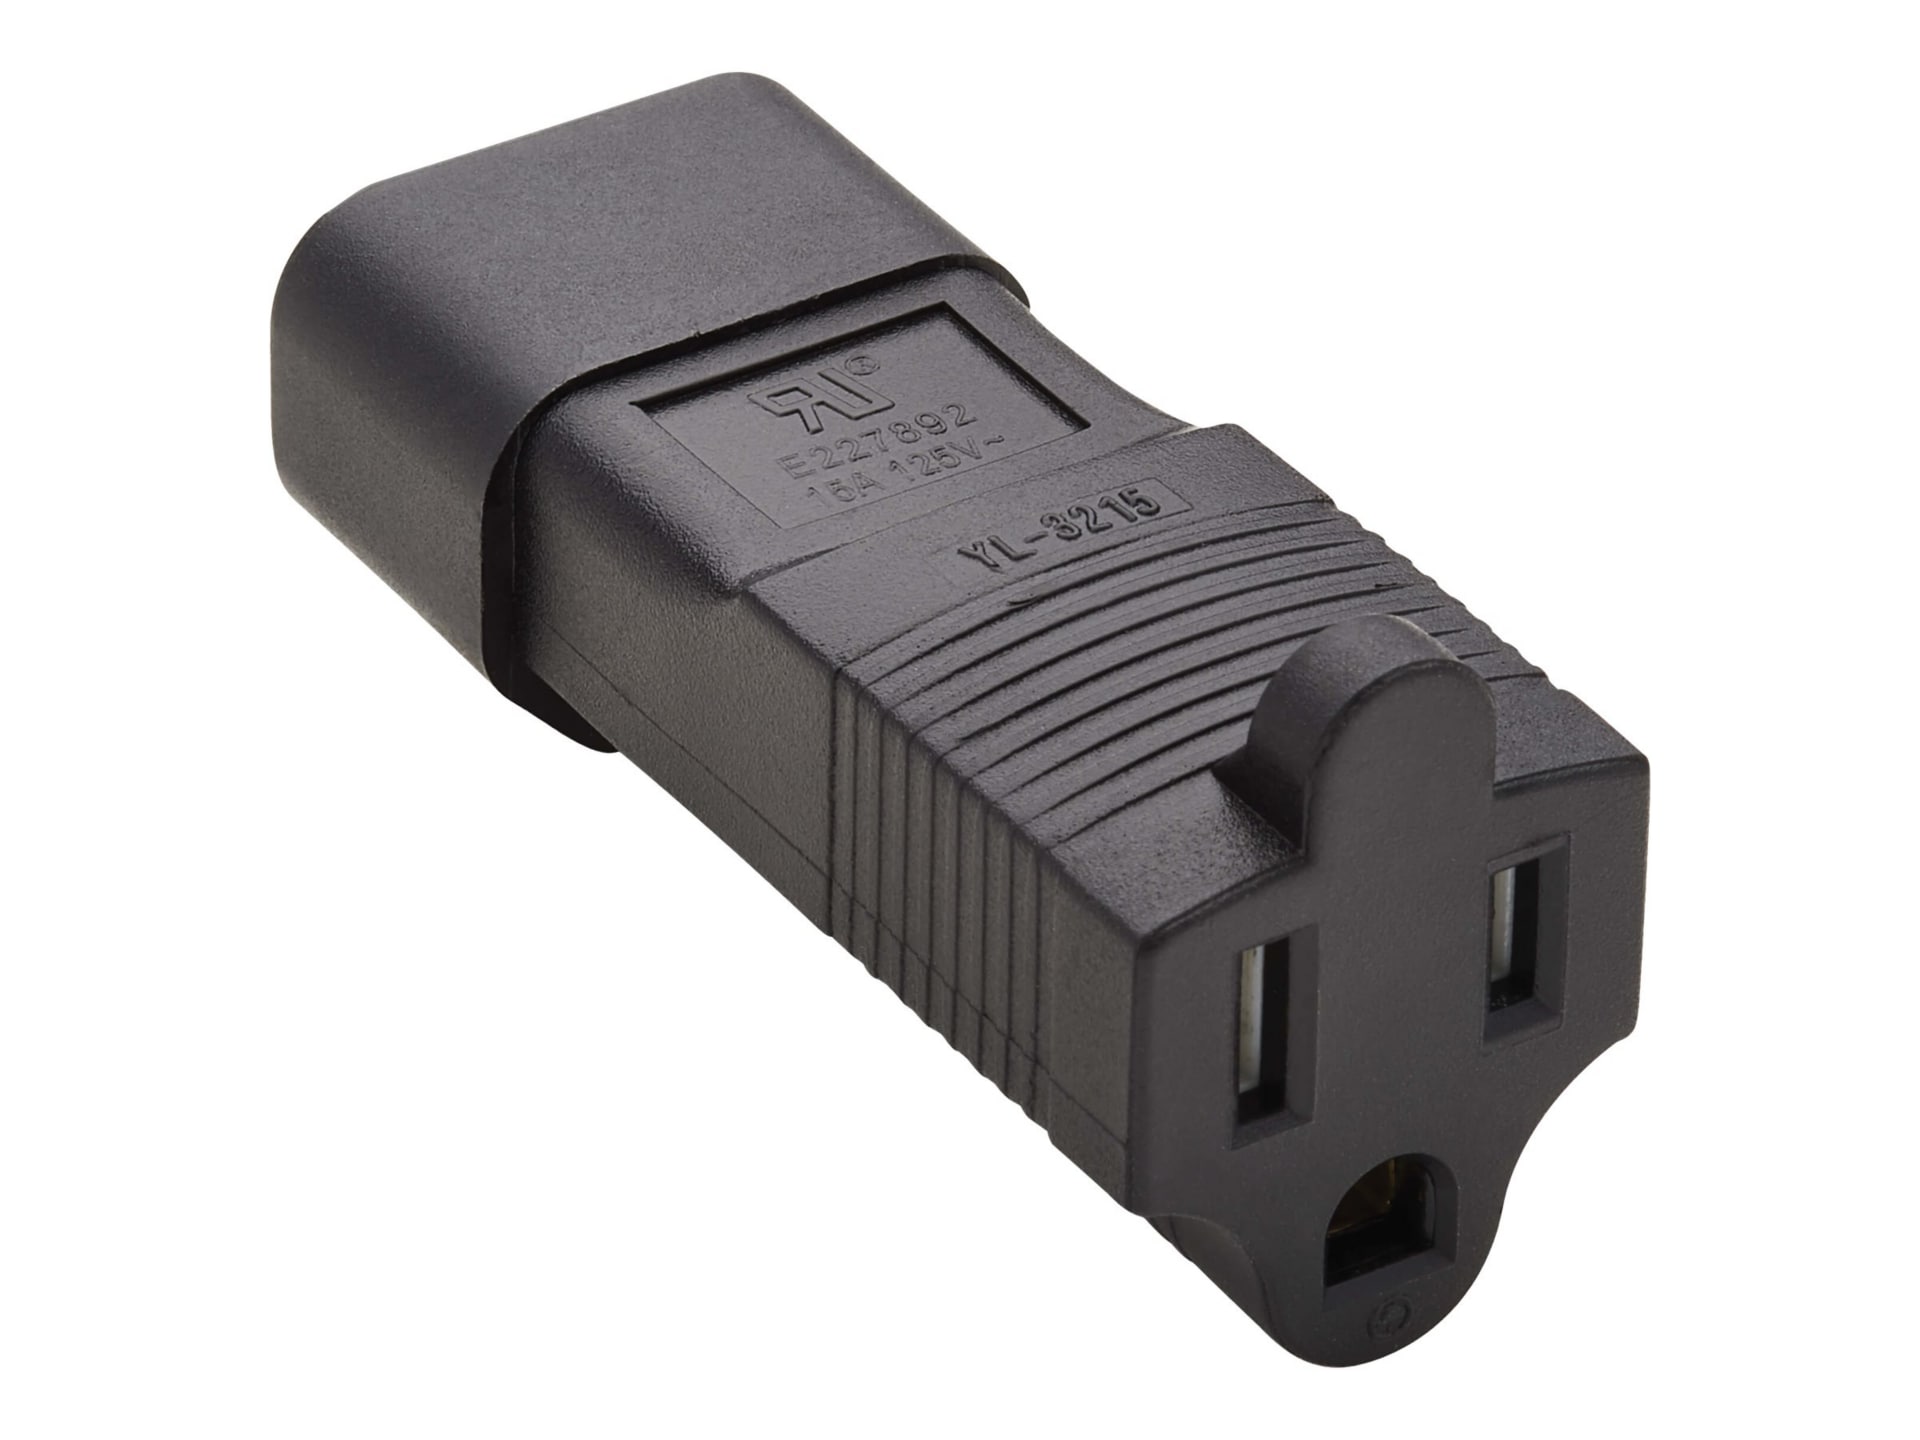 Tripp Lite NEMA 5-15R to C14 Power Cord Adapter - 15A, 125V, Black - power connector adapter - NEMA 5-15R to IEC 60320